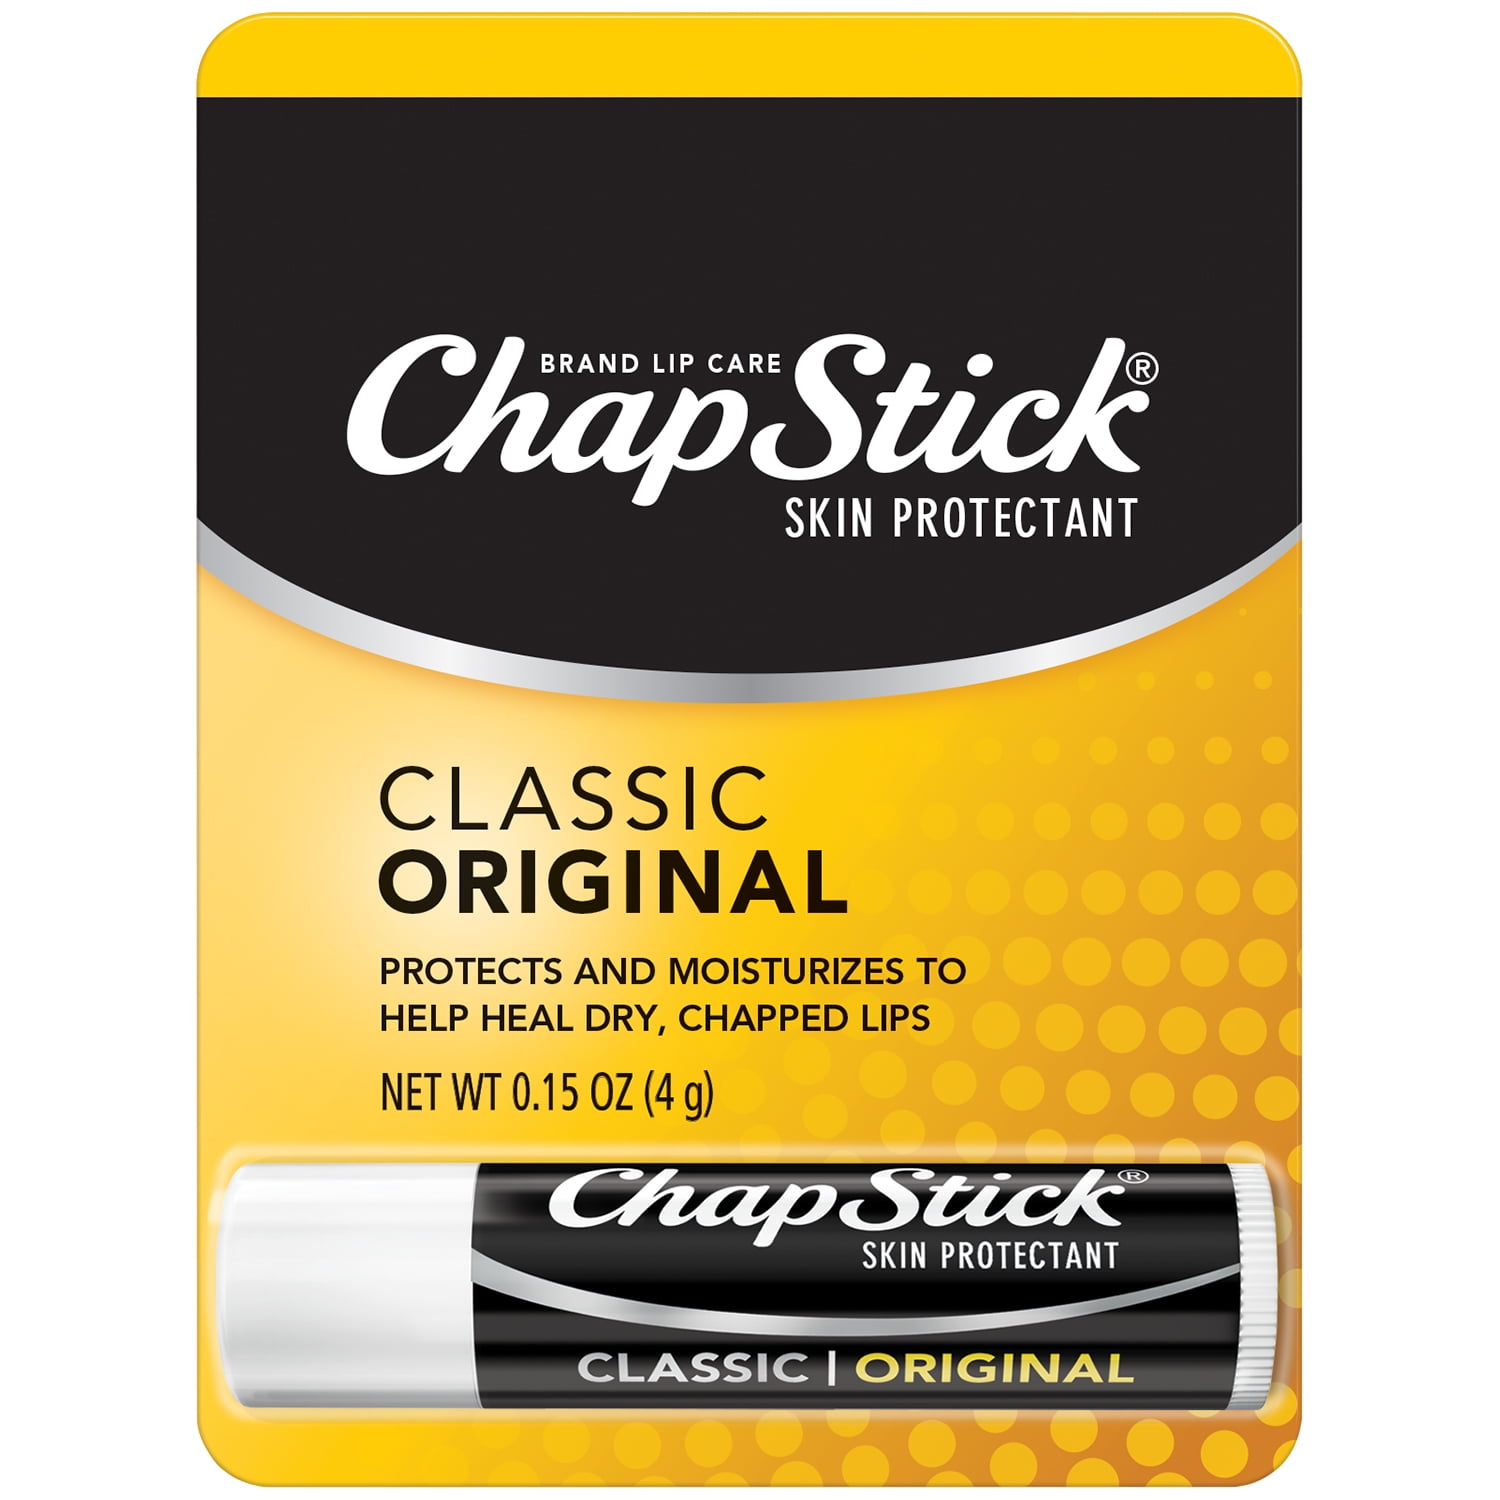 Chapstick brands